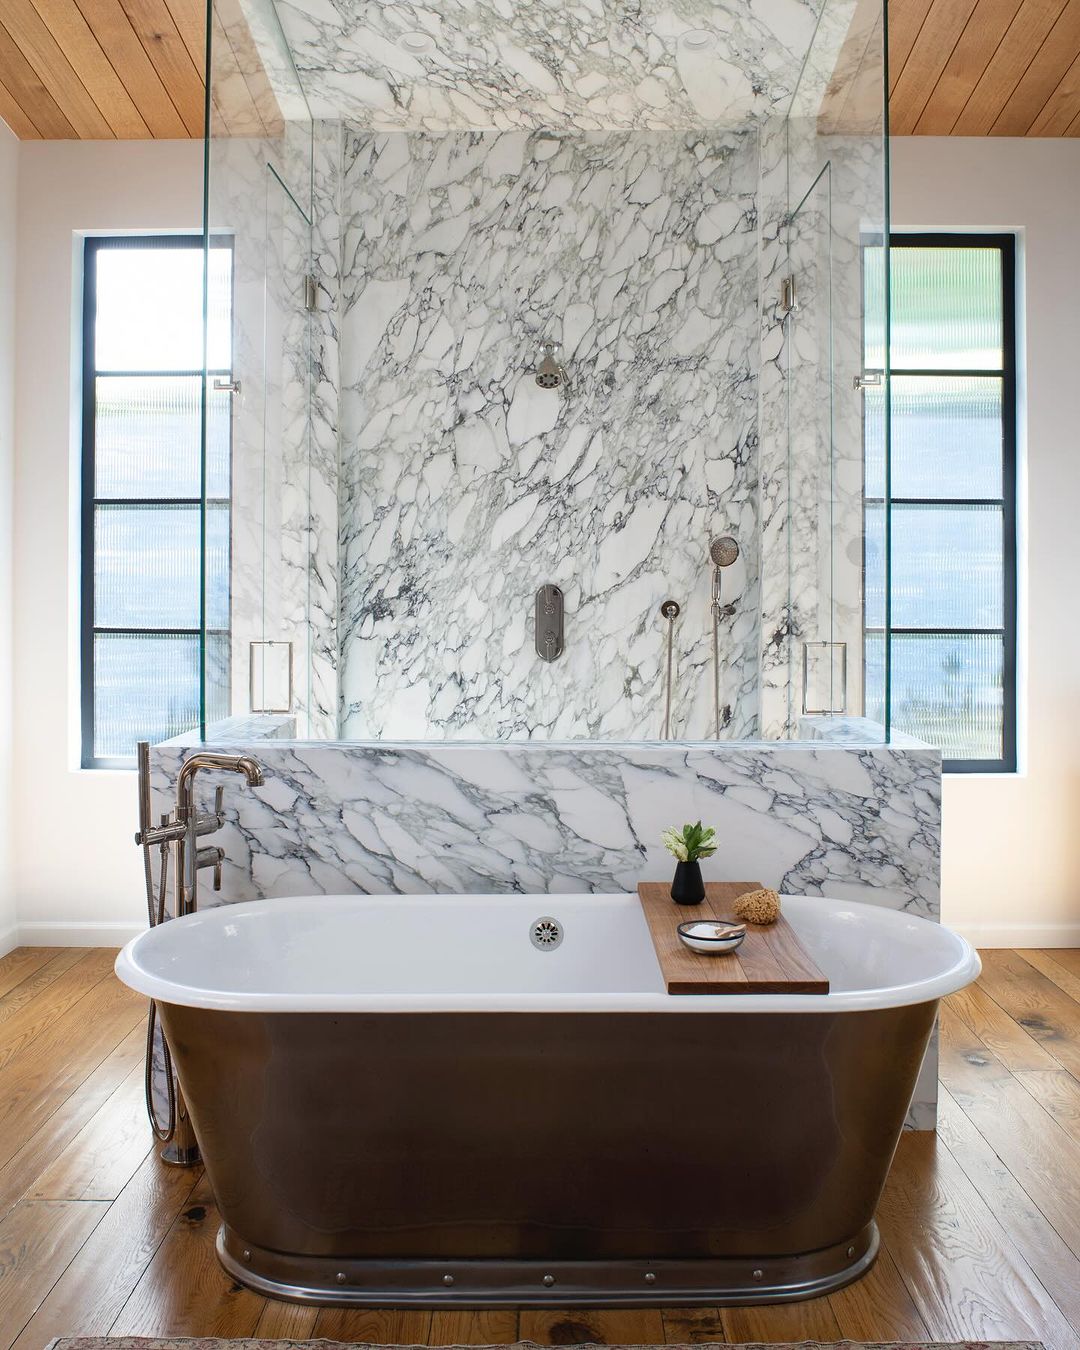 Enhance Modern Bath Design with a Sleek Wooden Tray